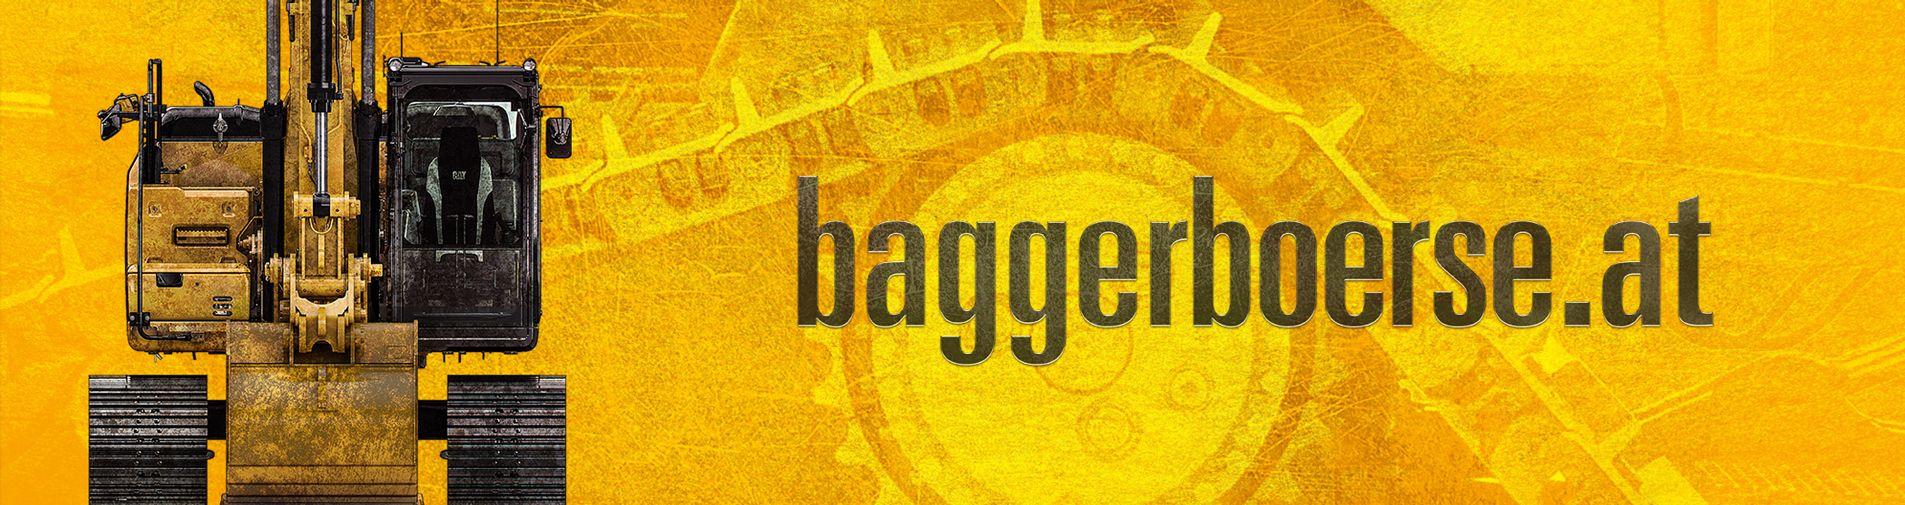 Banner_Baggerboerse_AT_1905x505.jpg